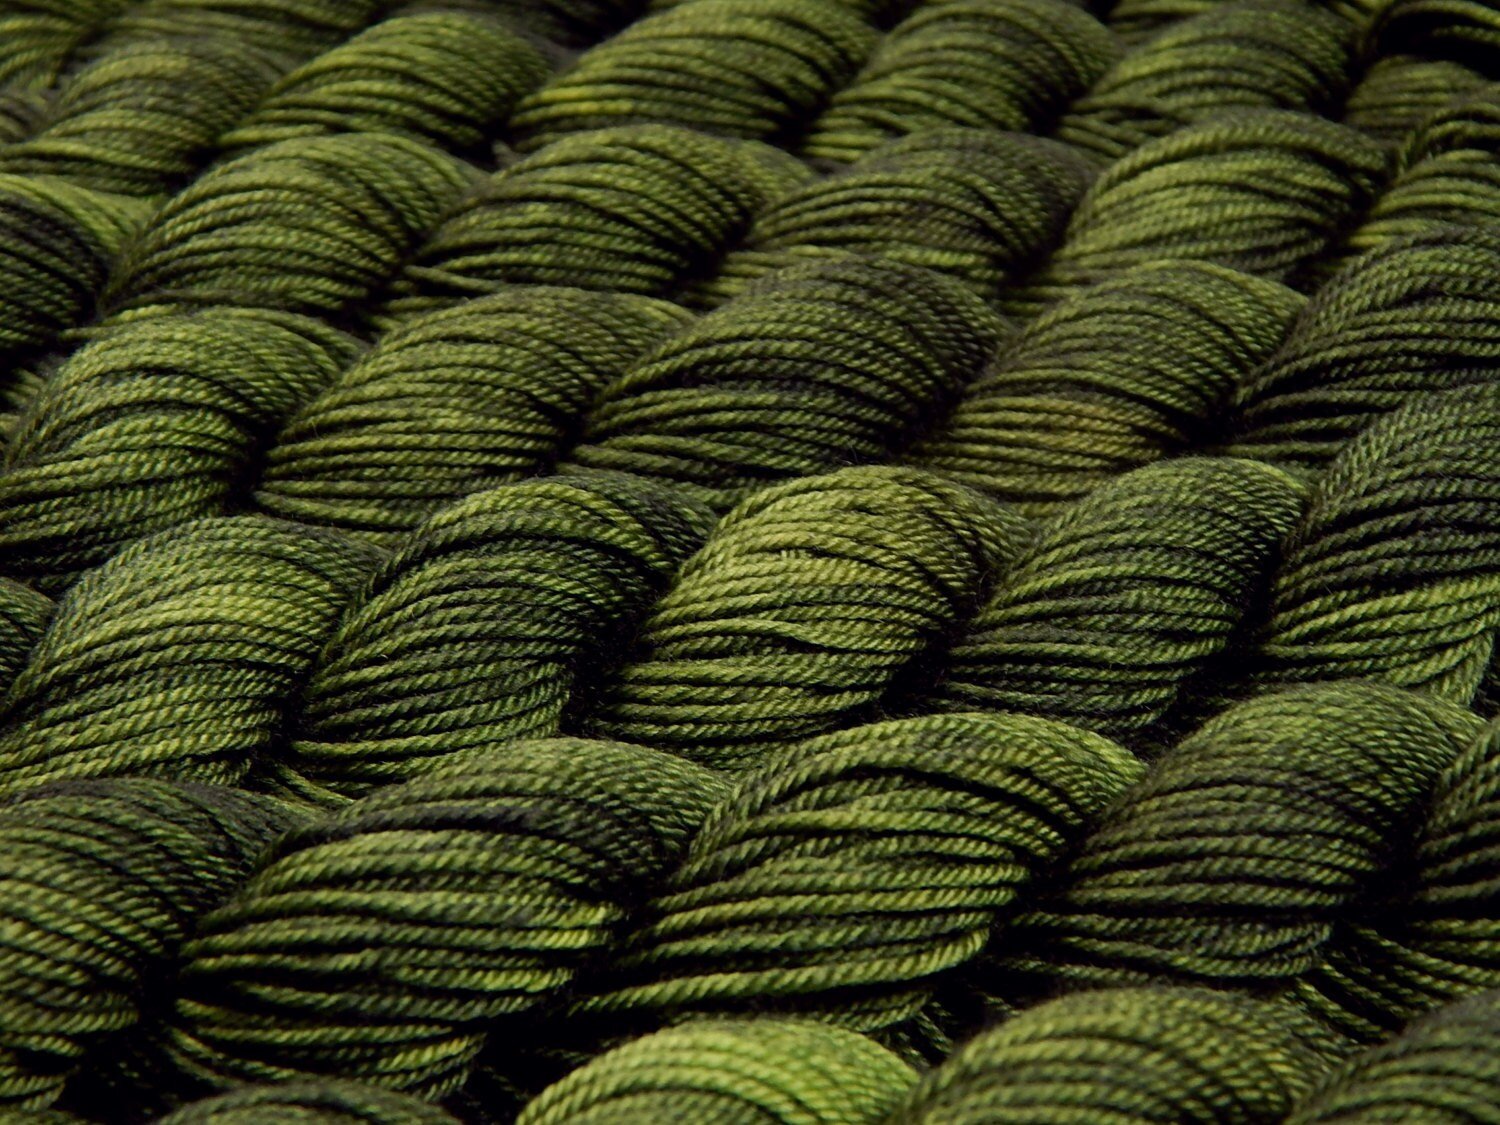 Mini Skeins Hand Dyed Yarn, Sock Weight 4 Ply Superwash 100% Merino Wool - Moss Tonal - Olive Green Fingering Weight Indie Dyer Sock Yarn